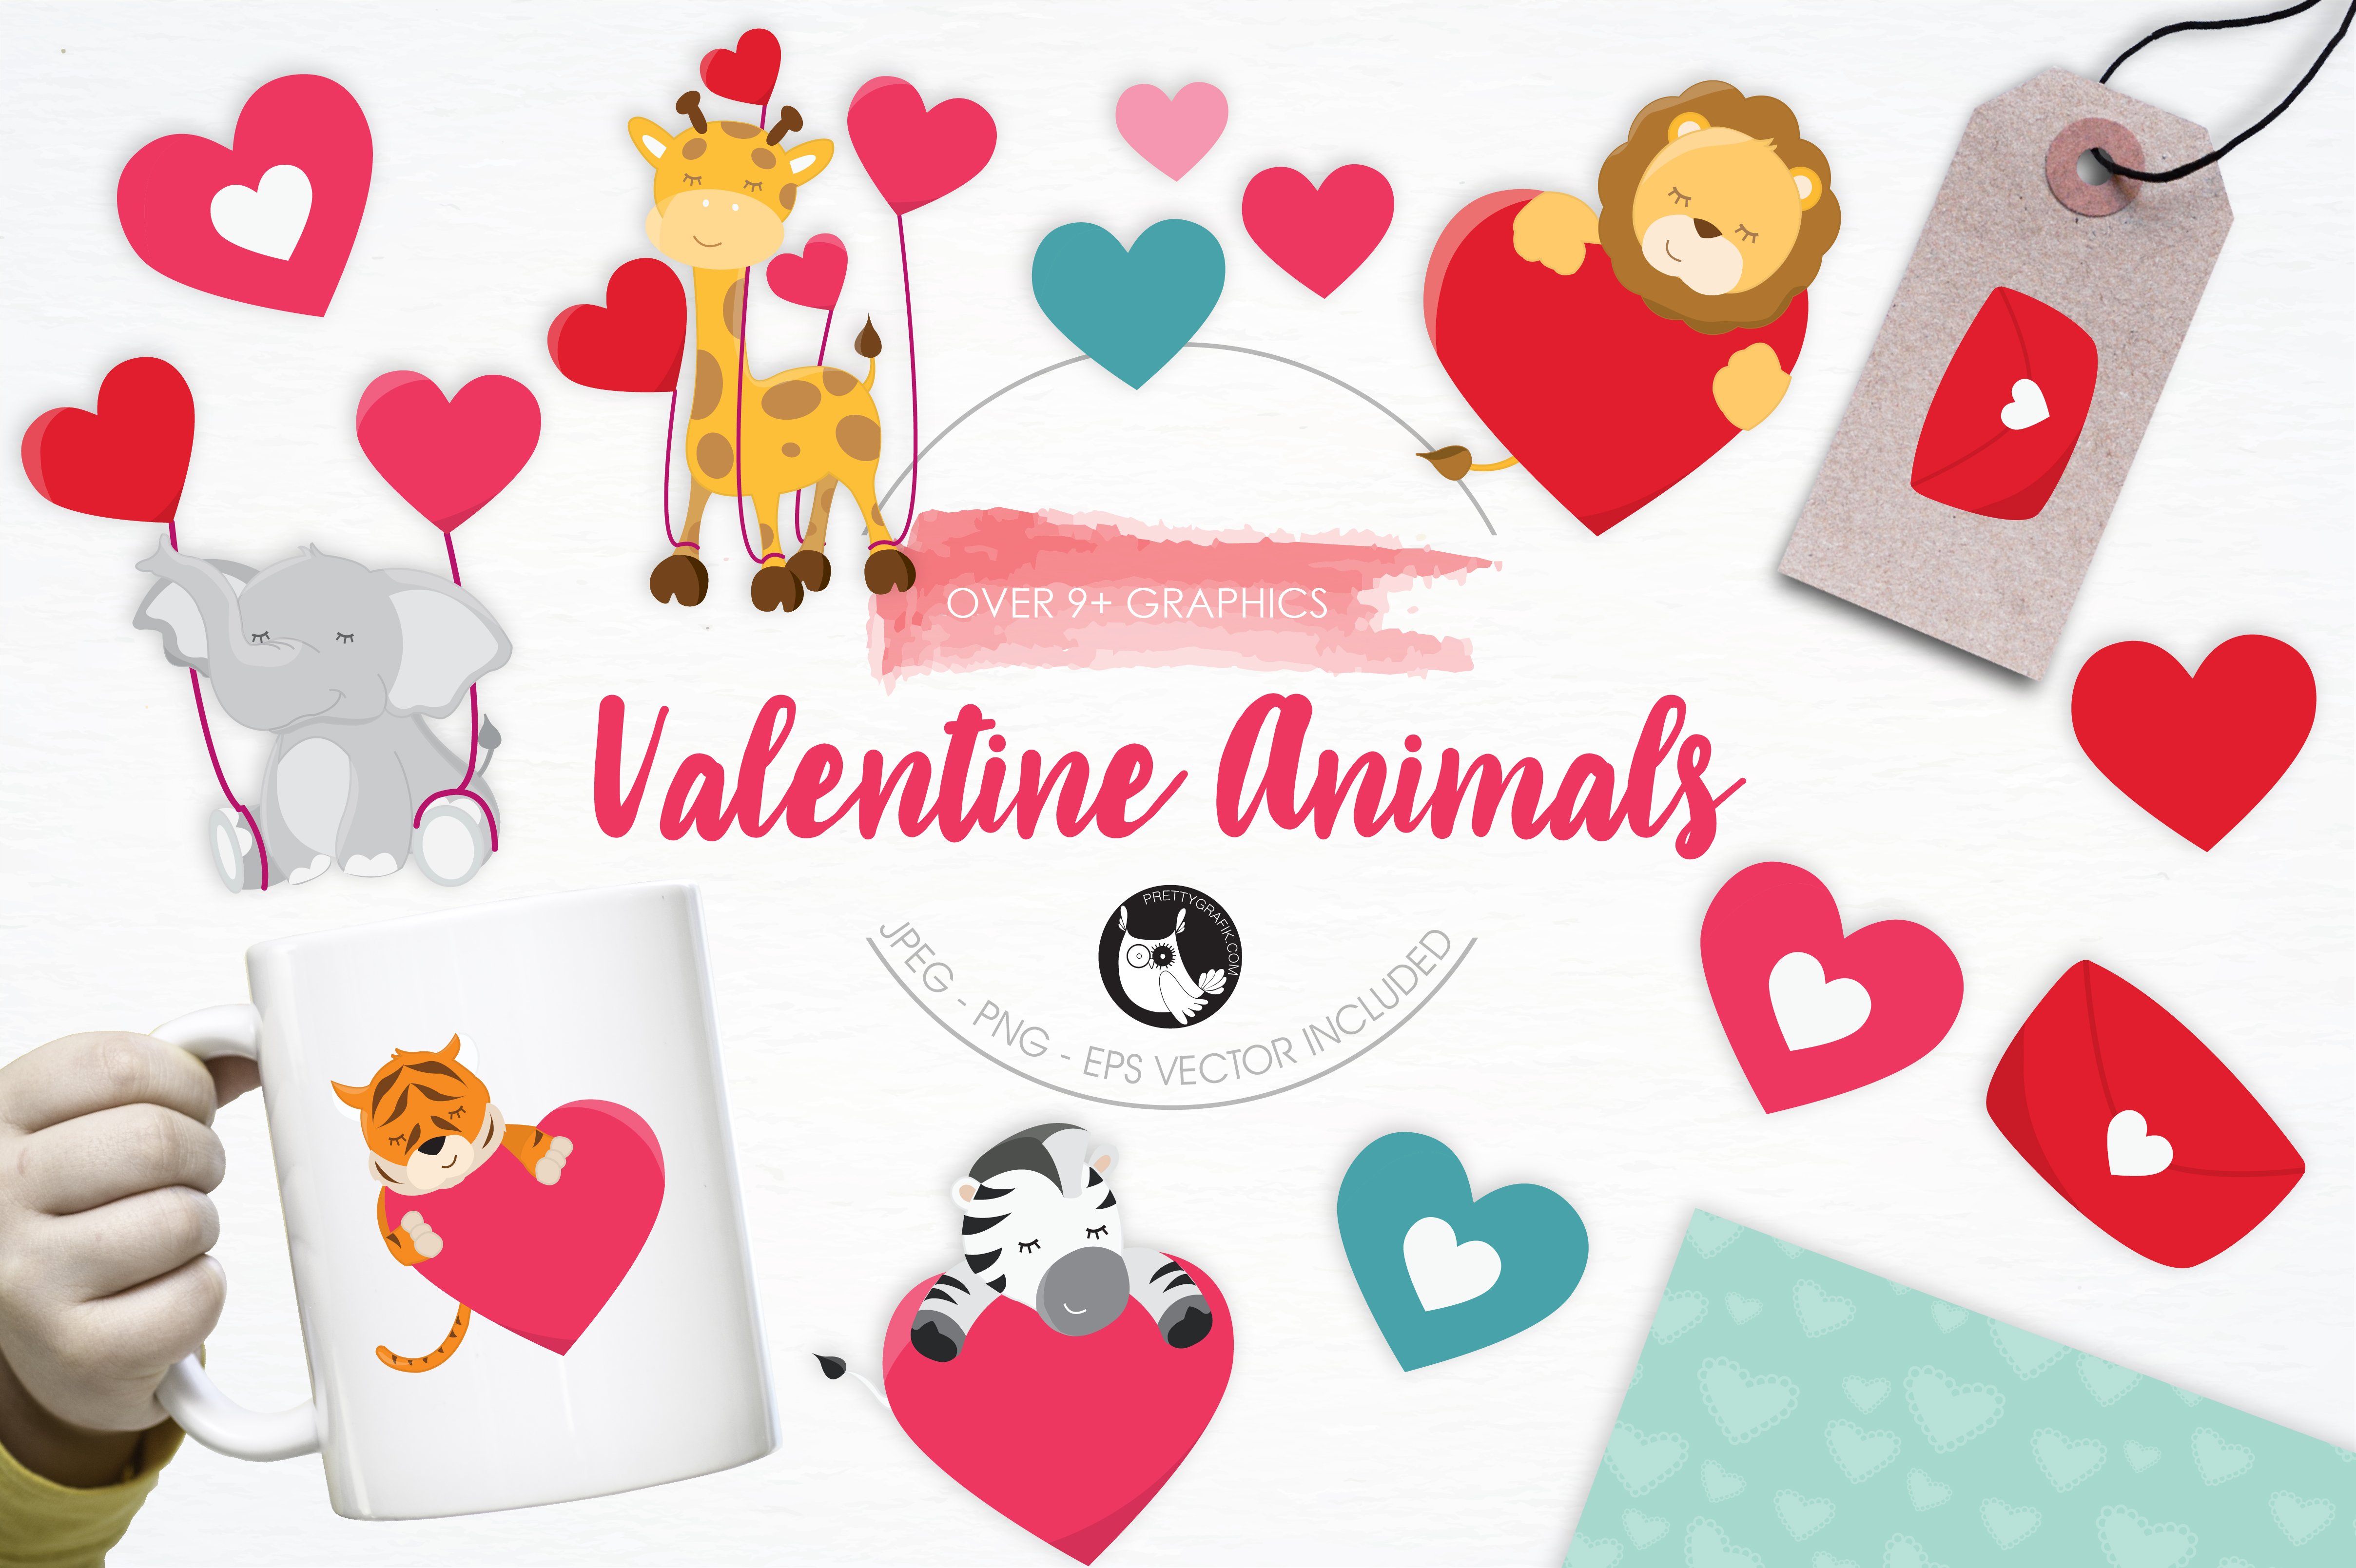 Valentine Animals illustration pack - Vector Image